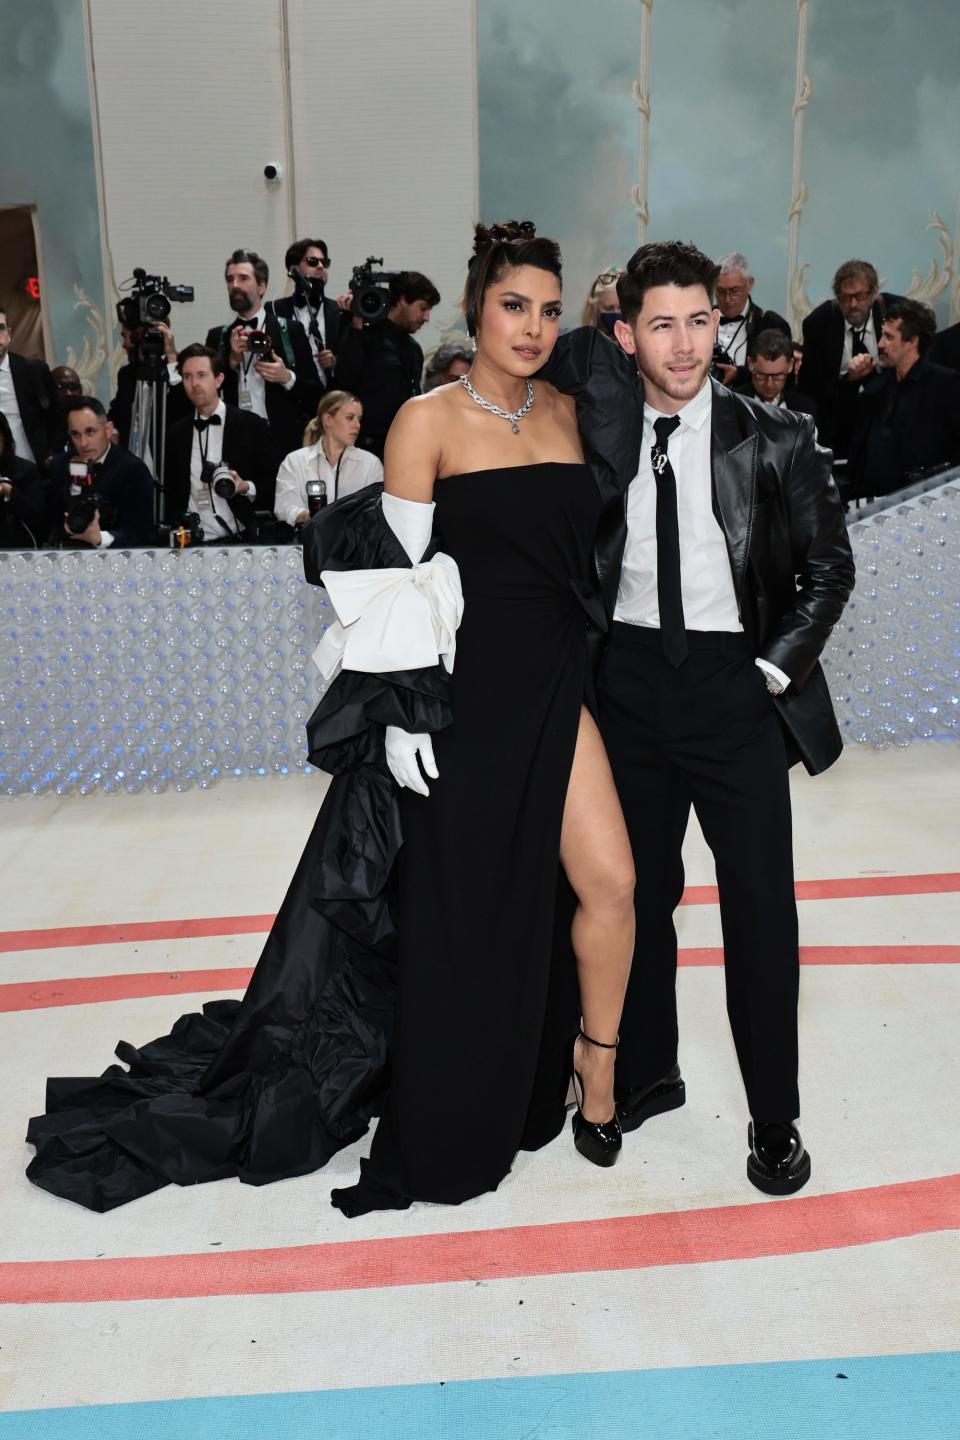 Priyanka Chopra Jonas and Nick Jonas being photographed on the red carpet at the 2023 Met Gala.